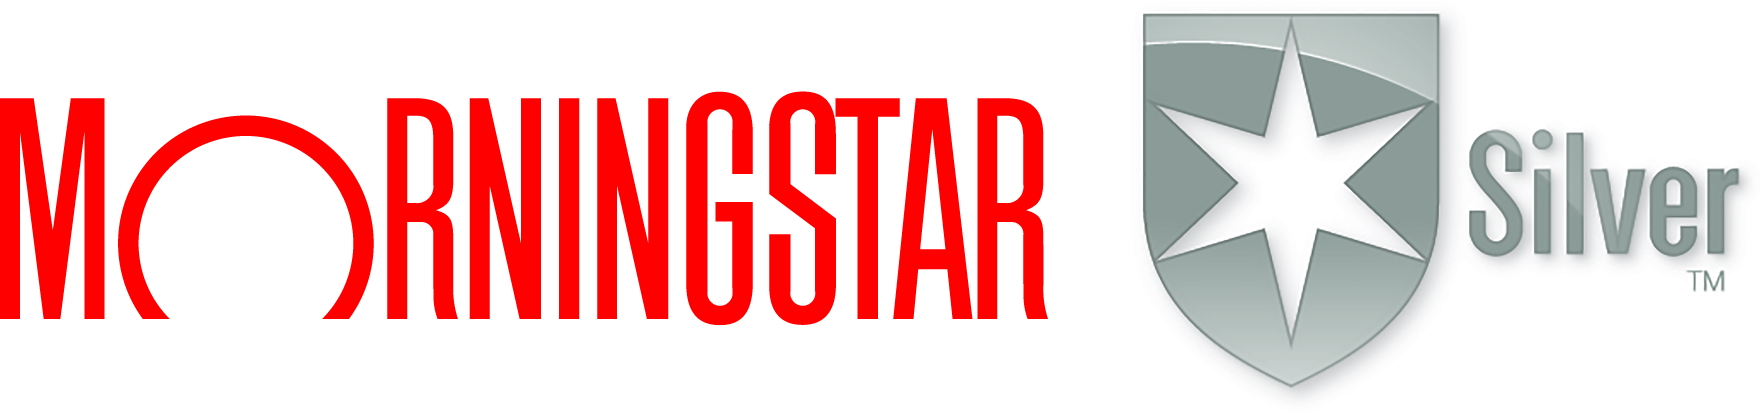 Morning star Bronze award logo